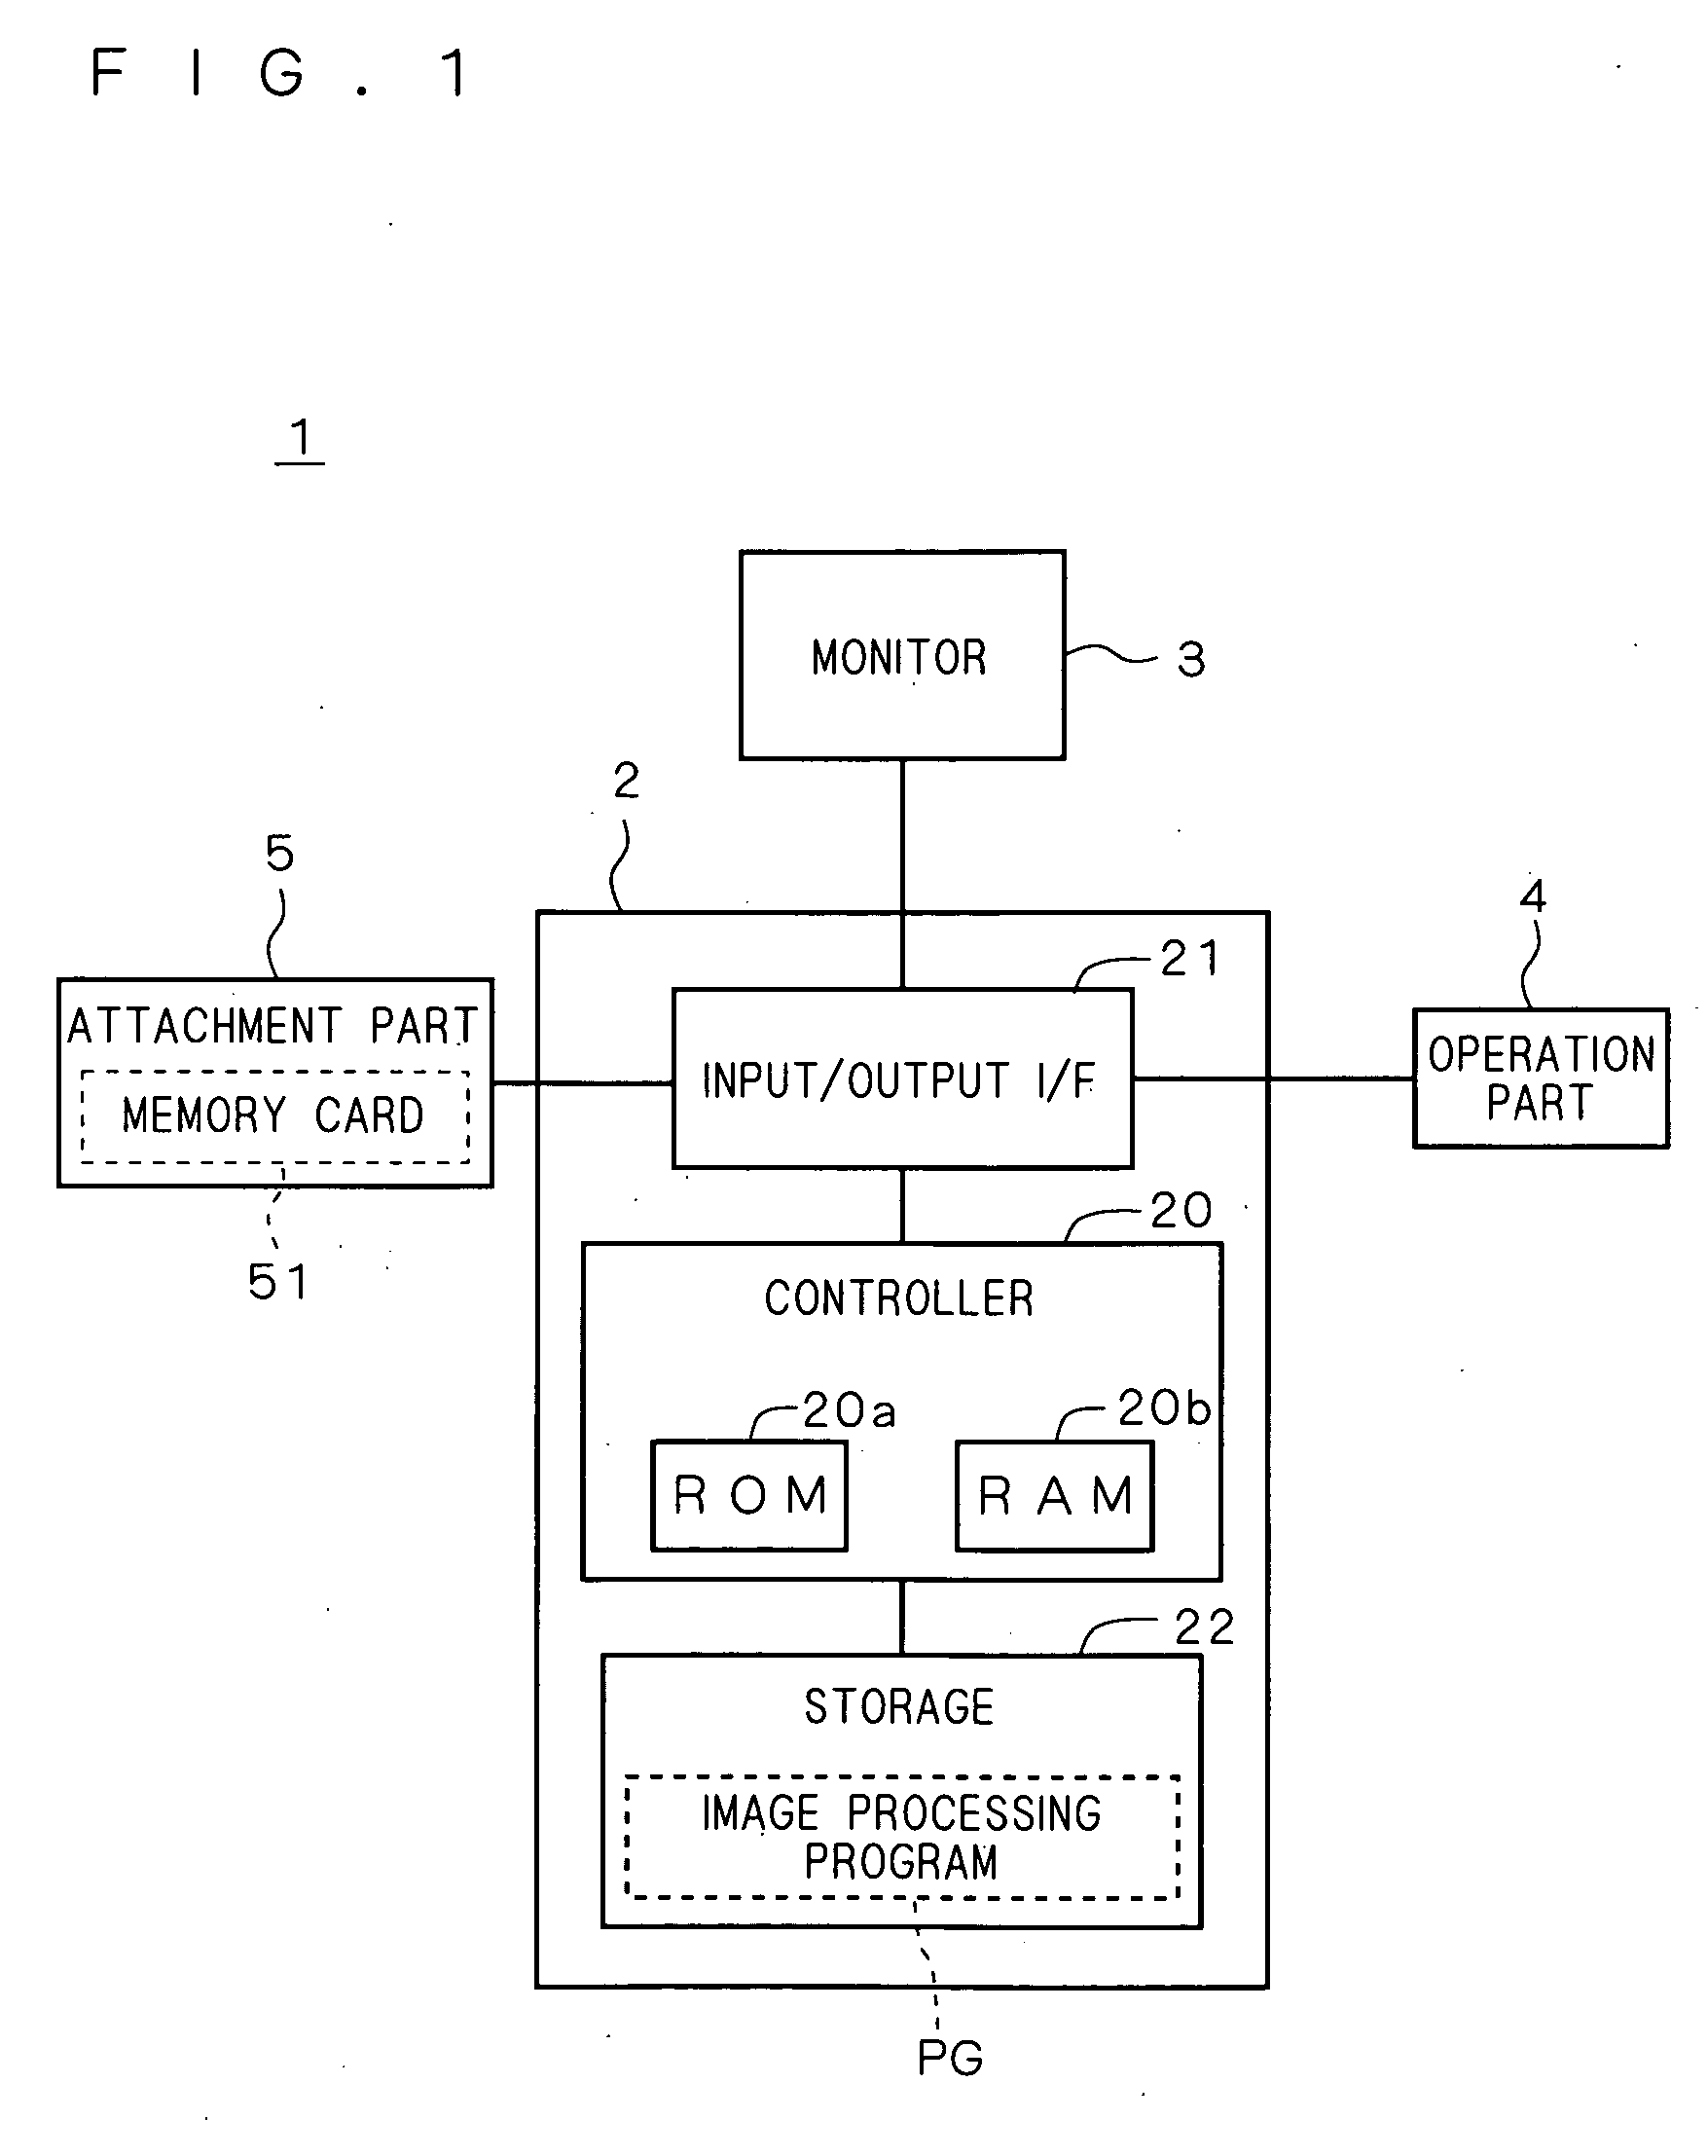 Image processing apparatus, and computer program